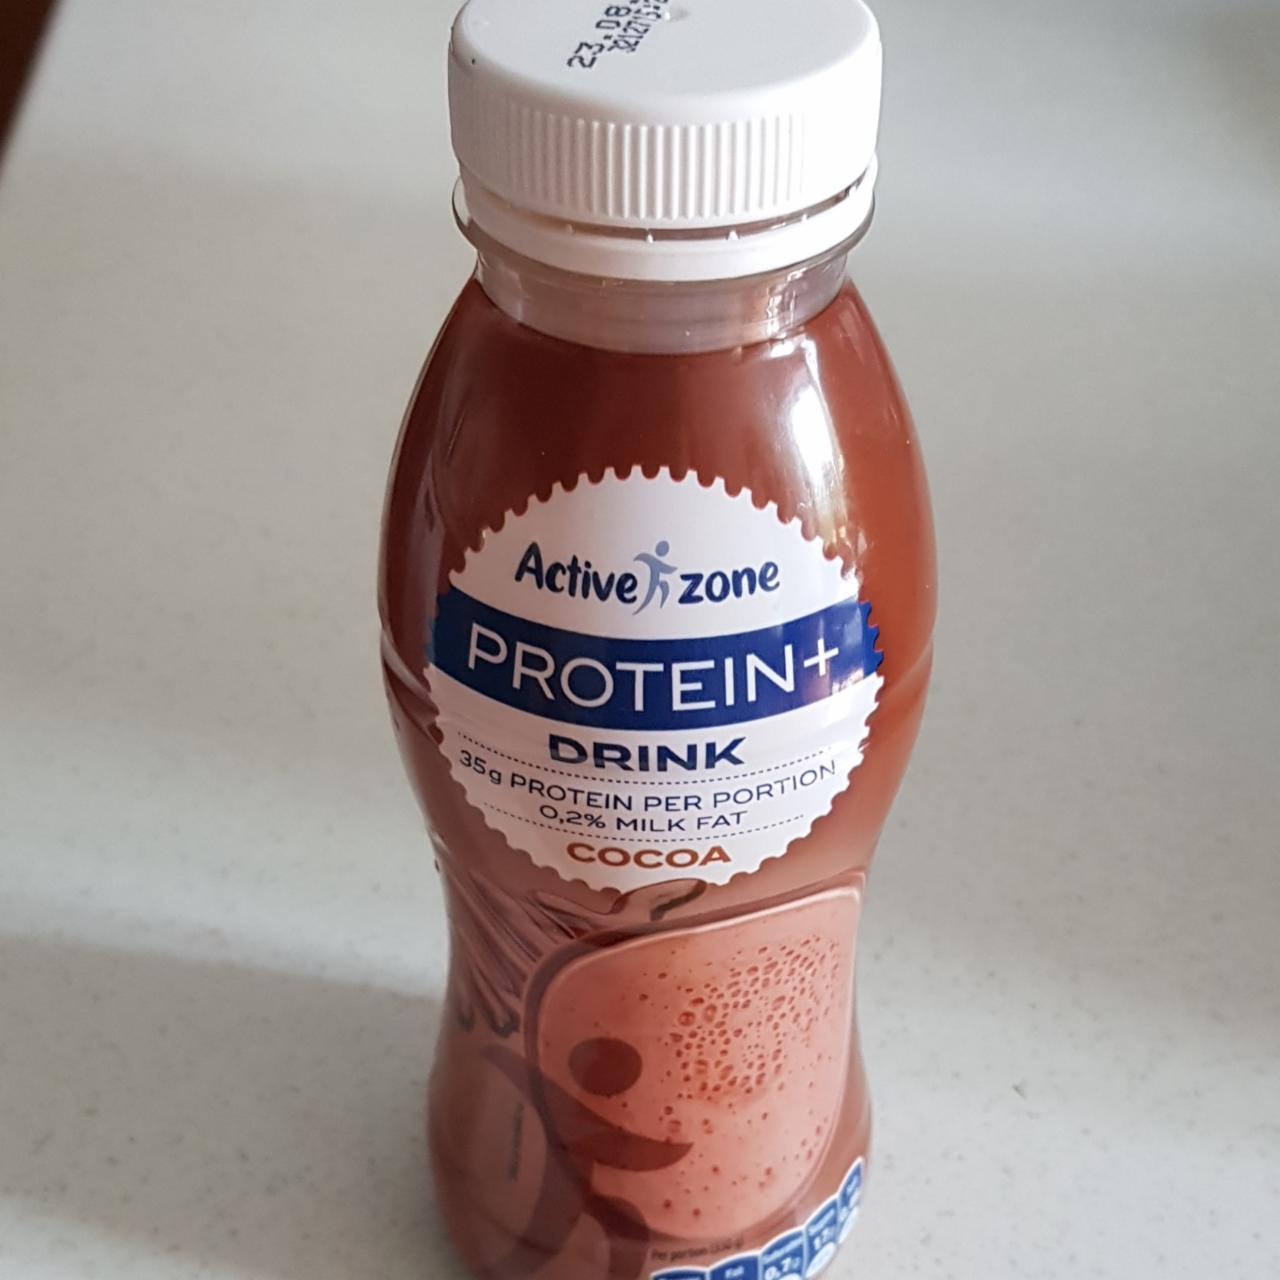 Fotografie - Protein+ drink cocoa - Active zone